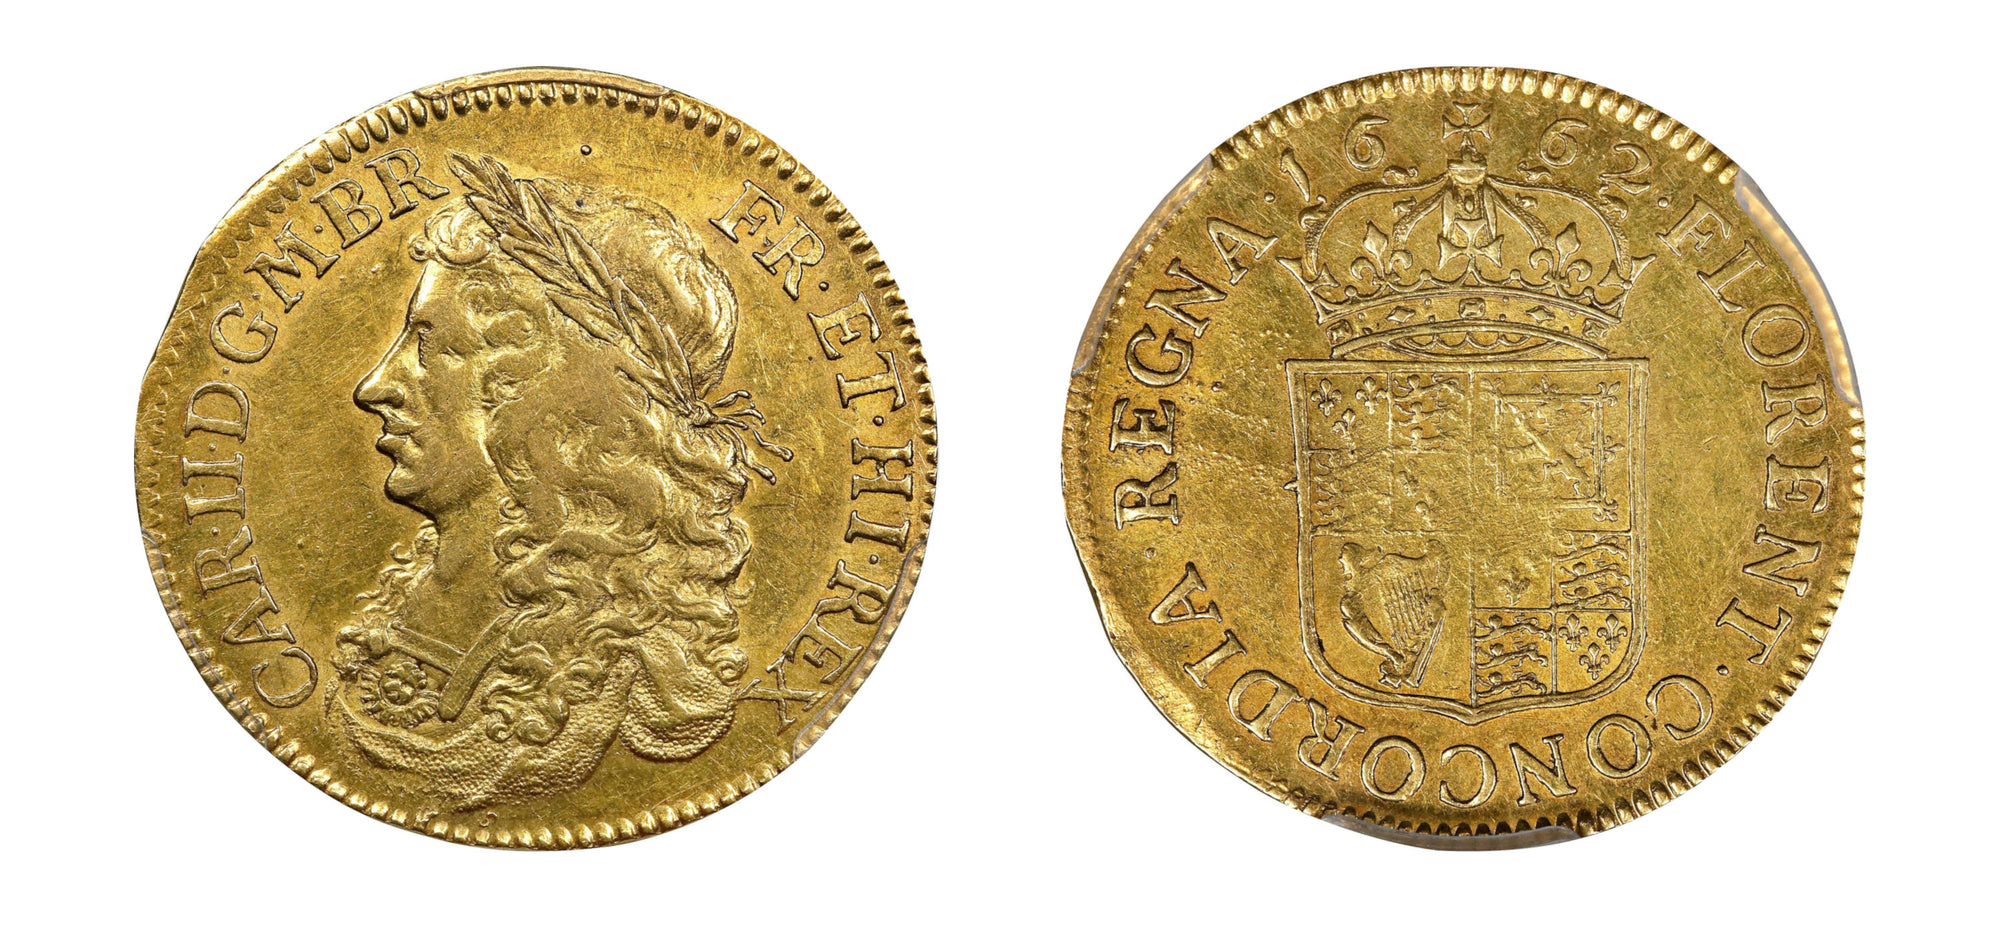 1662 King Charles II Gold Broad 20 Shillings PCGS AU55 - Hard Asset Management, Inc